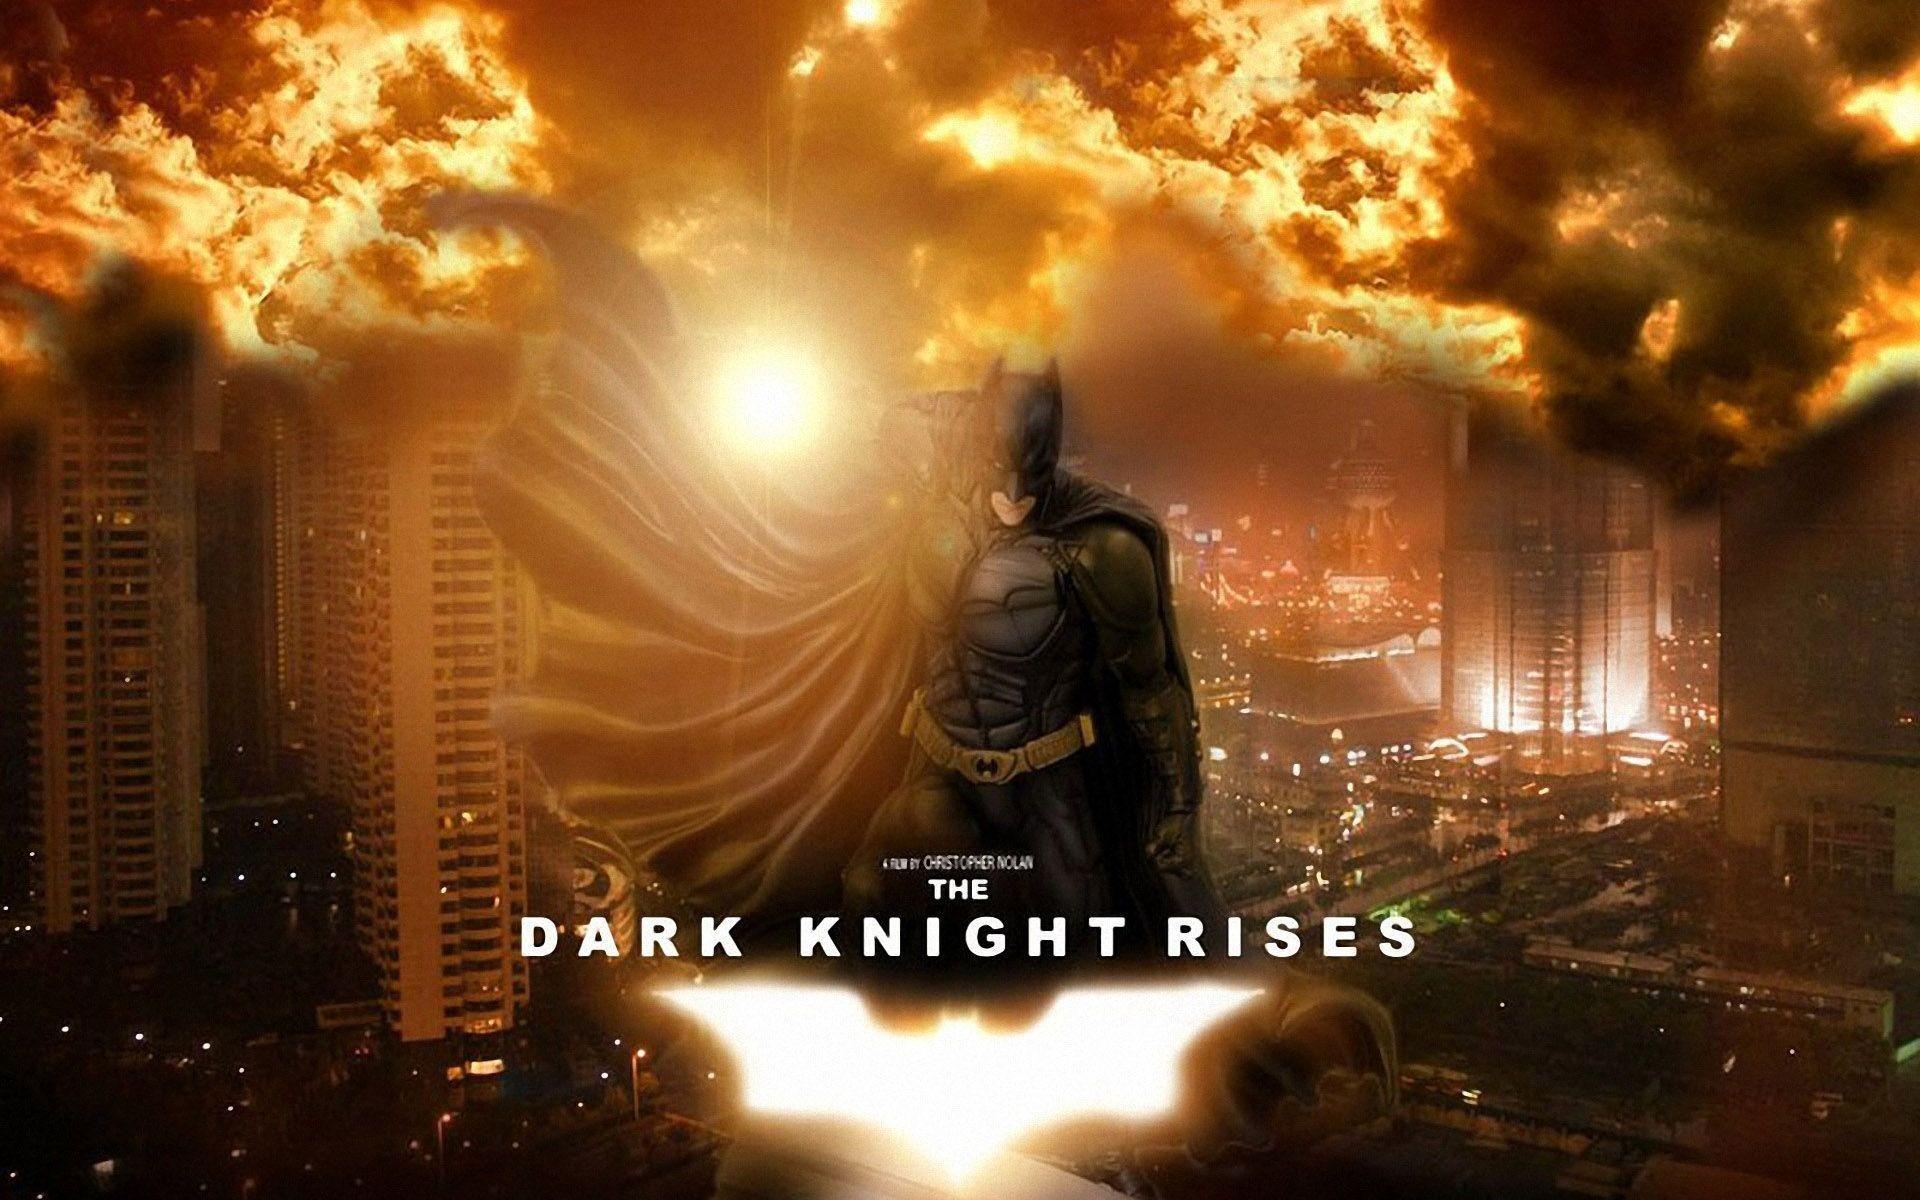 Free Download batman rises knight dark image wallpaper